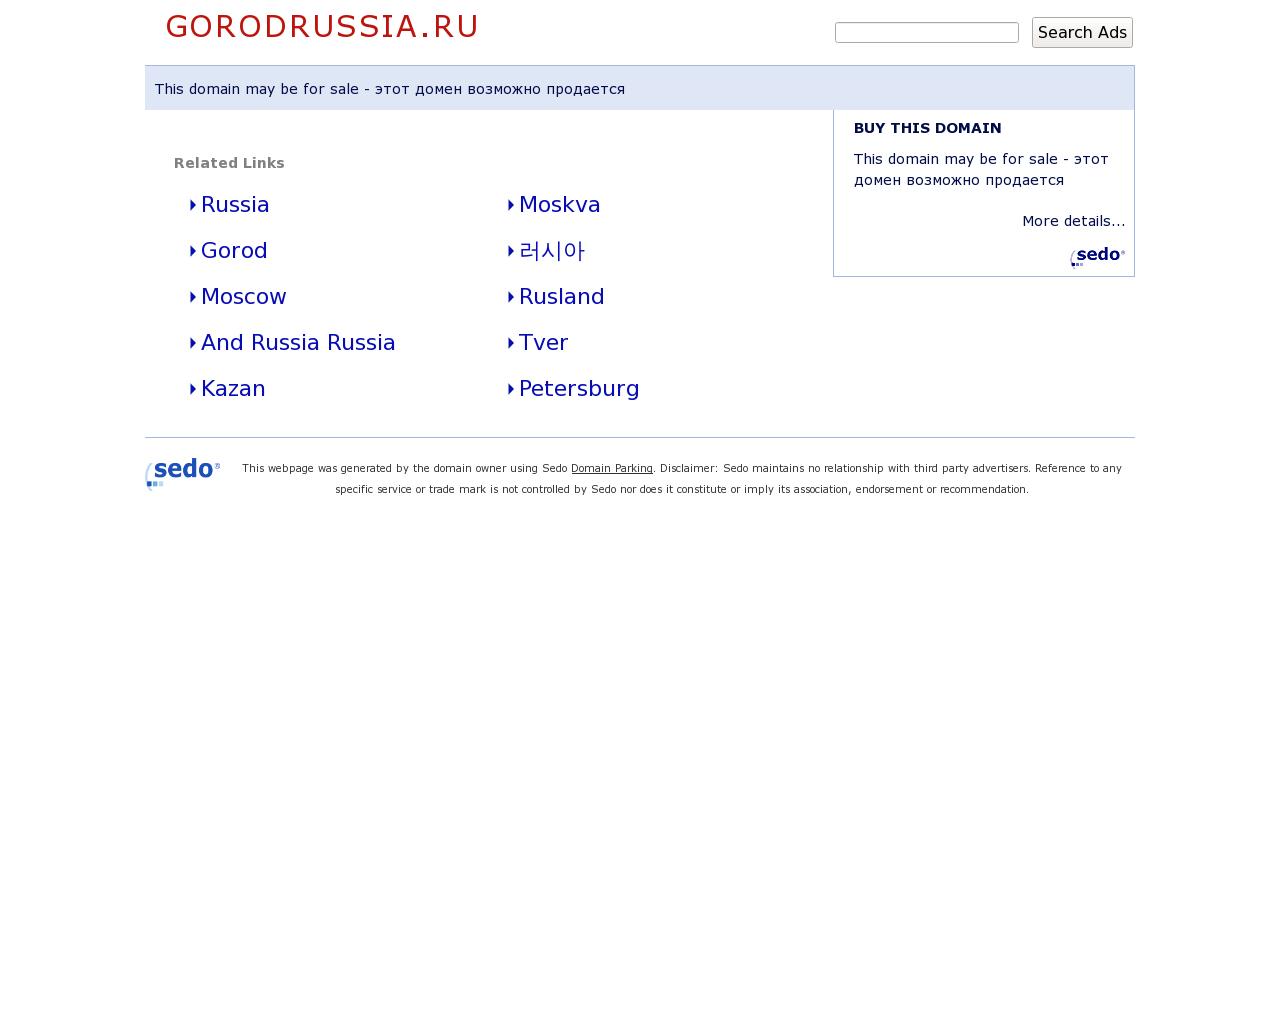 Изображение сайта gorodrussia.ru в разрешении 1280x1024